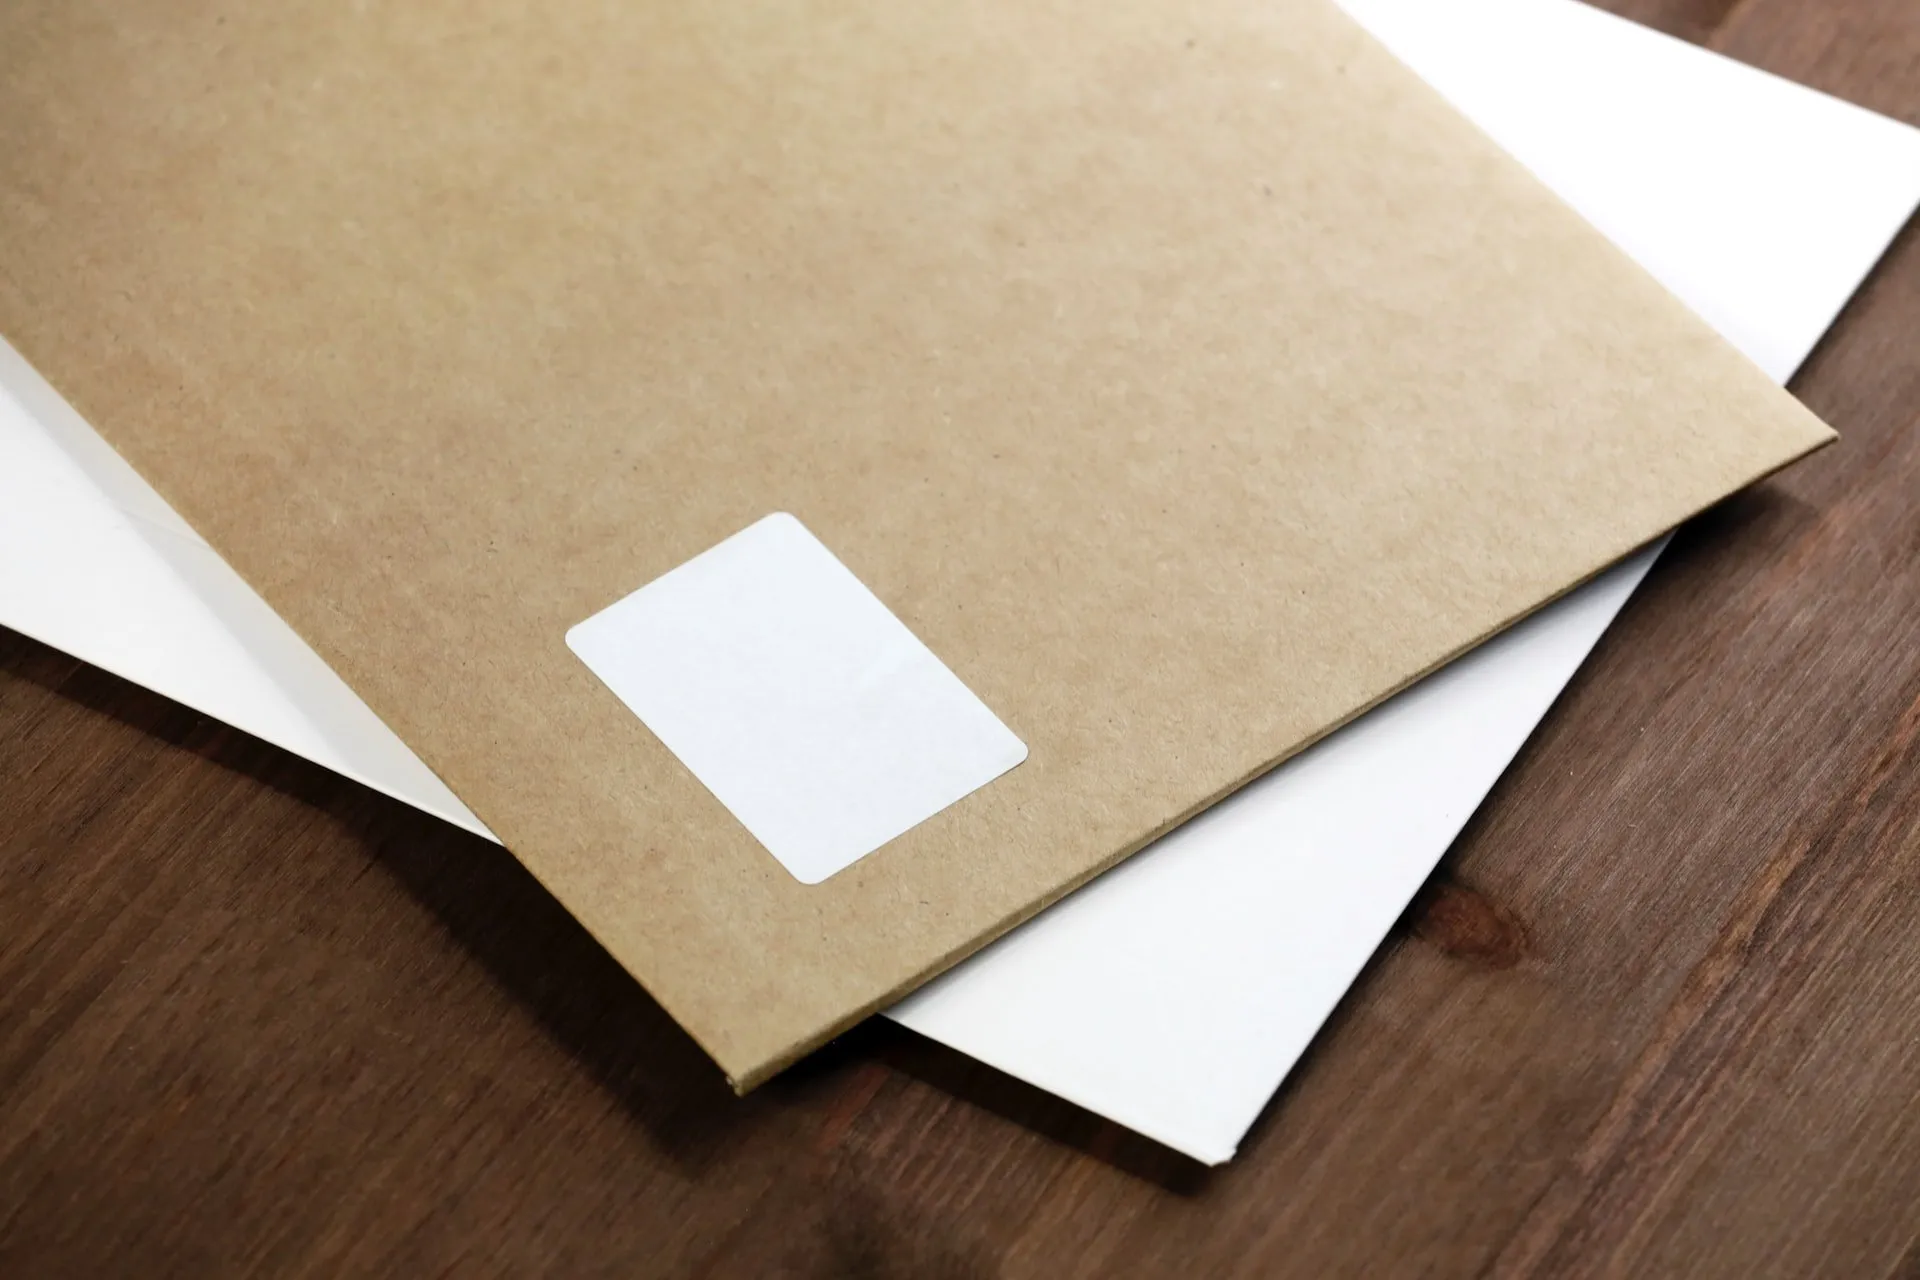 adresowanie kopert, adresat i nadawca, koperty, jak zaadresować kopertę